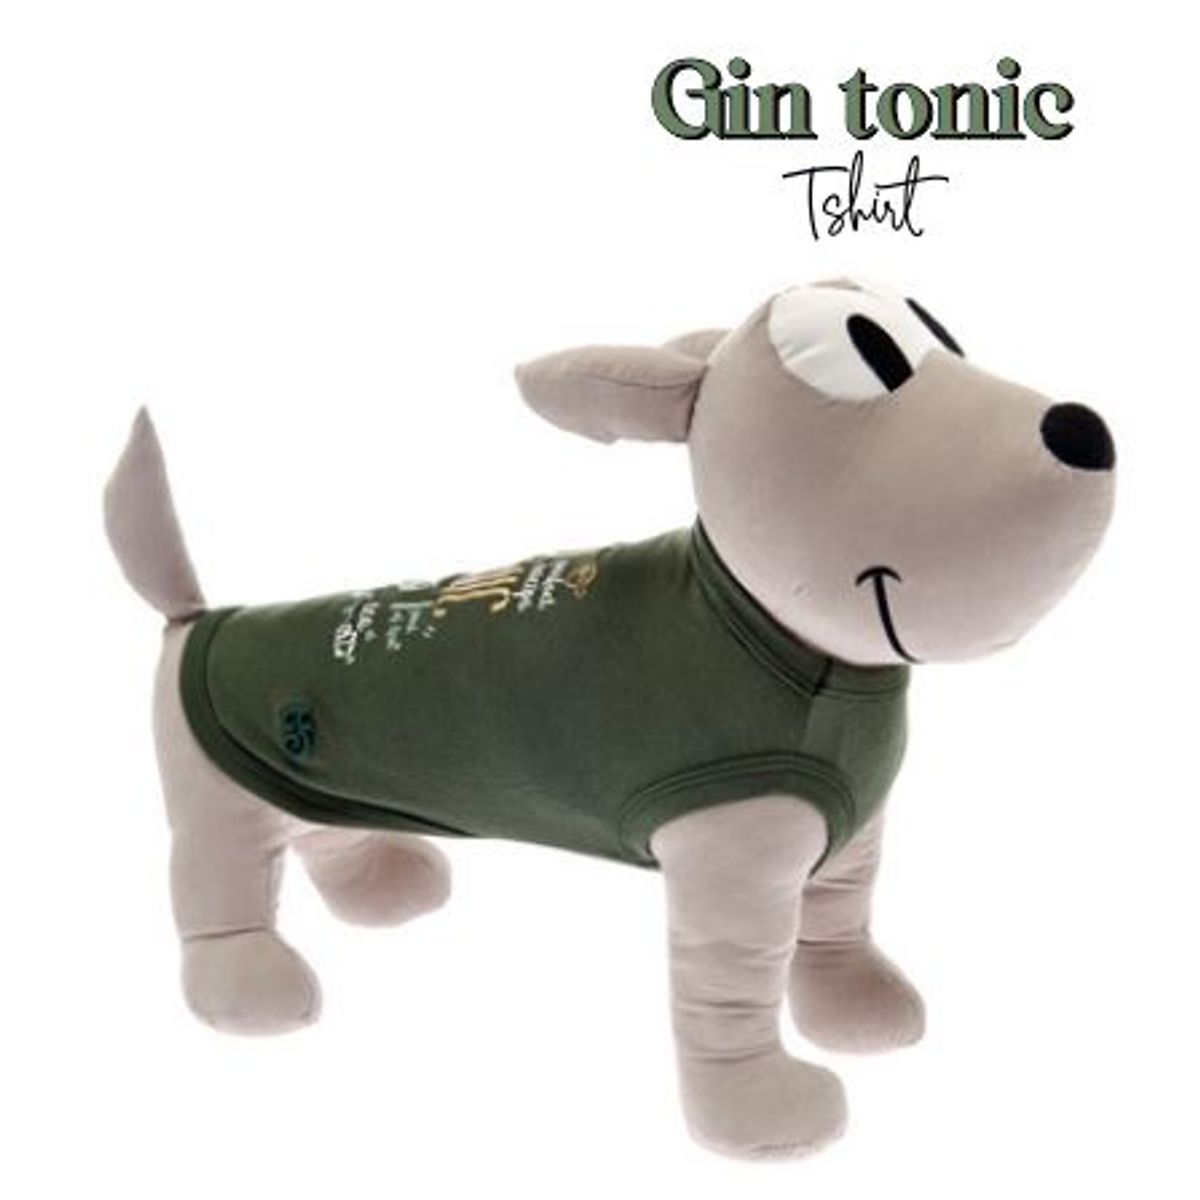 T-shirt Gin Tonic - Ferribiella 40 cm